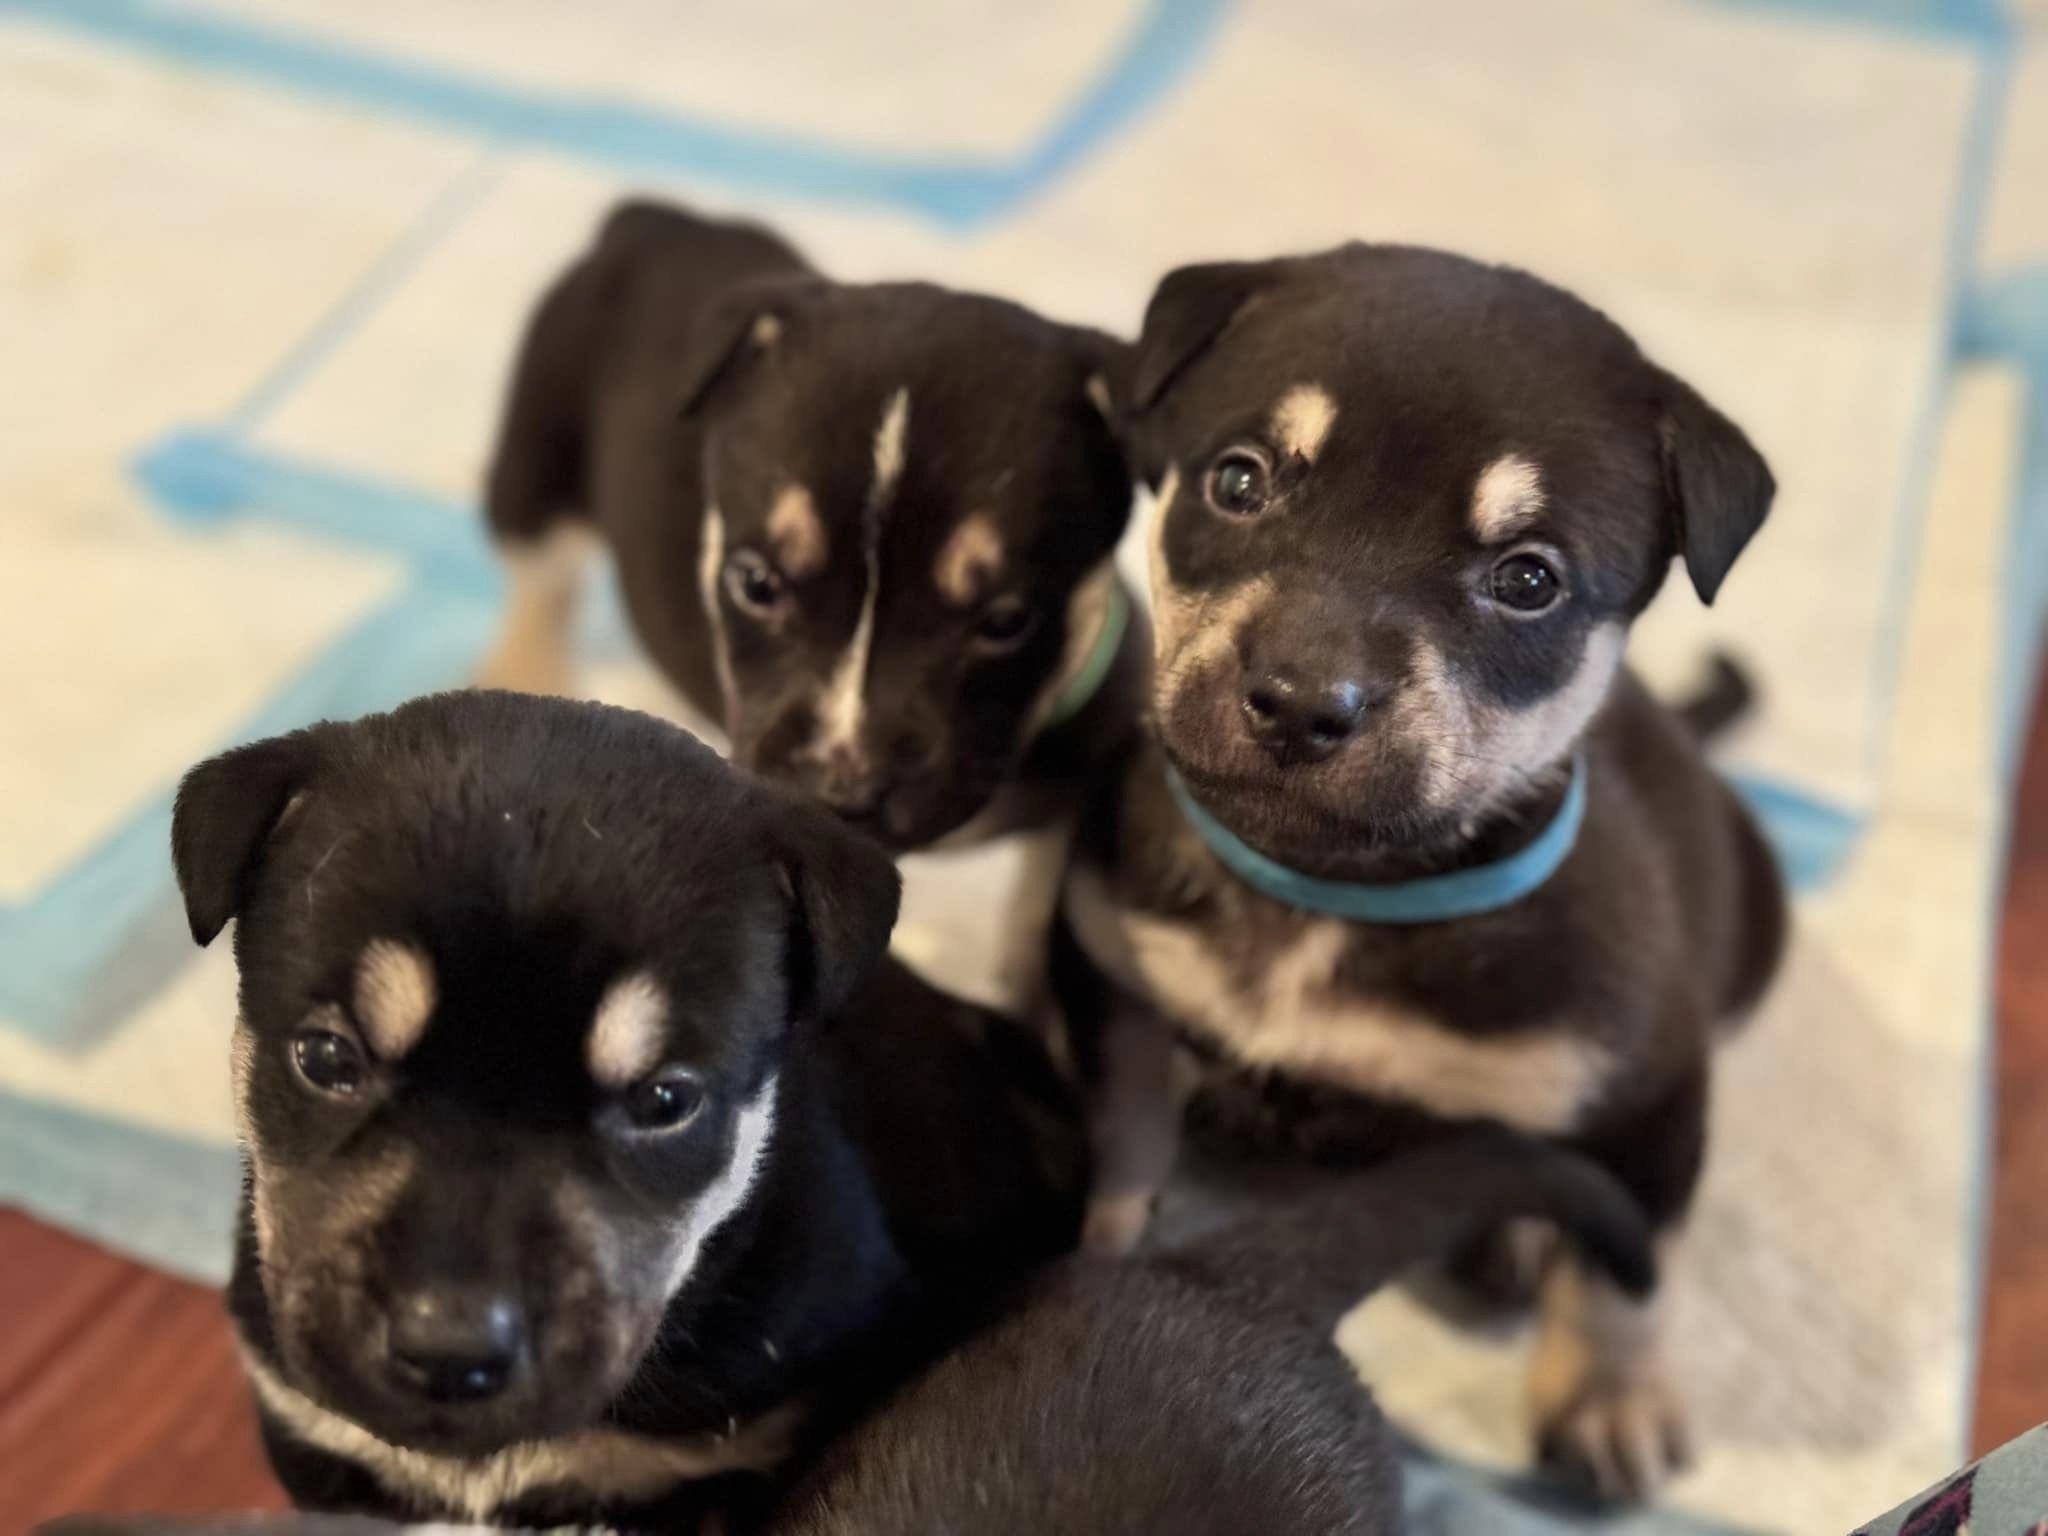 Three very cute puppies